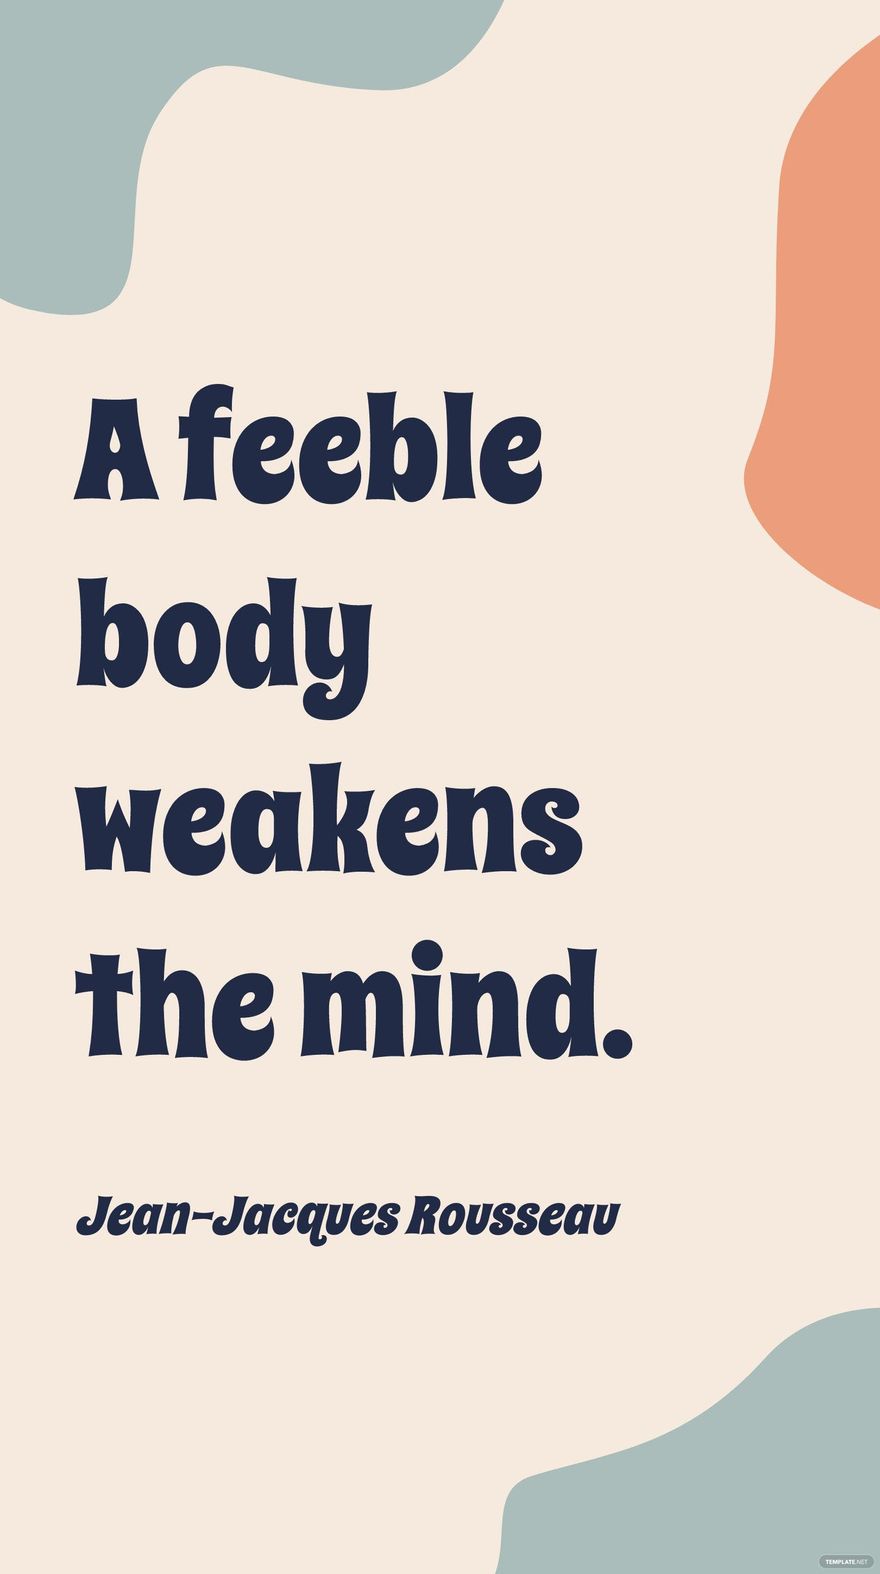 Jean-Jacques Rousseau - A feeble body weakens the mind. in JPG